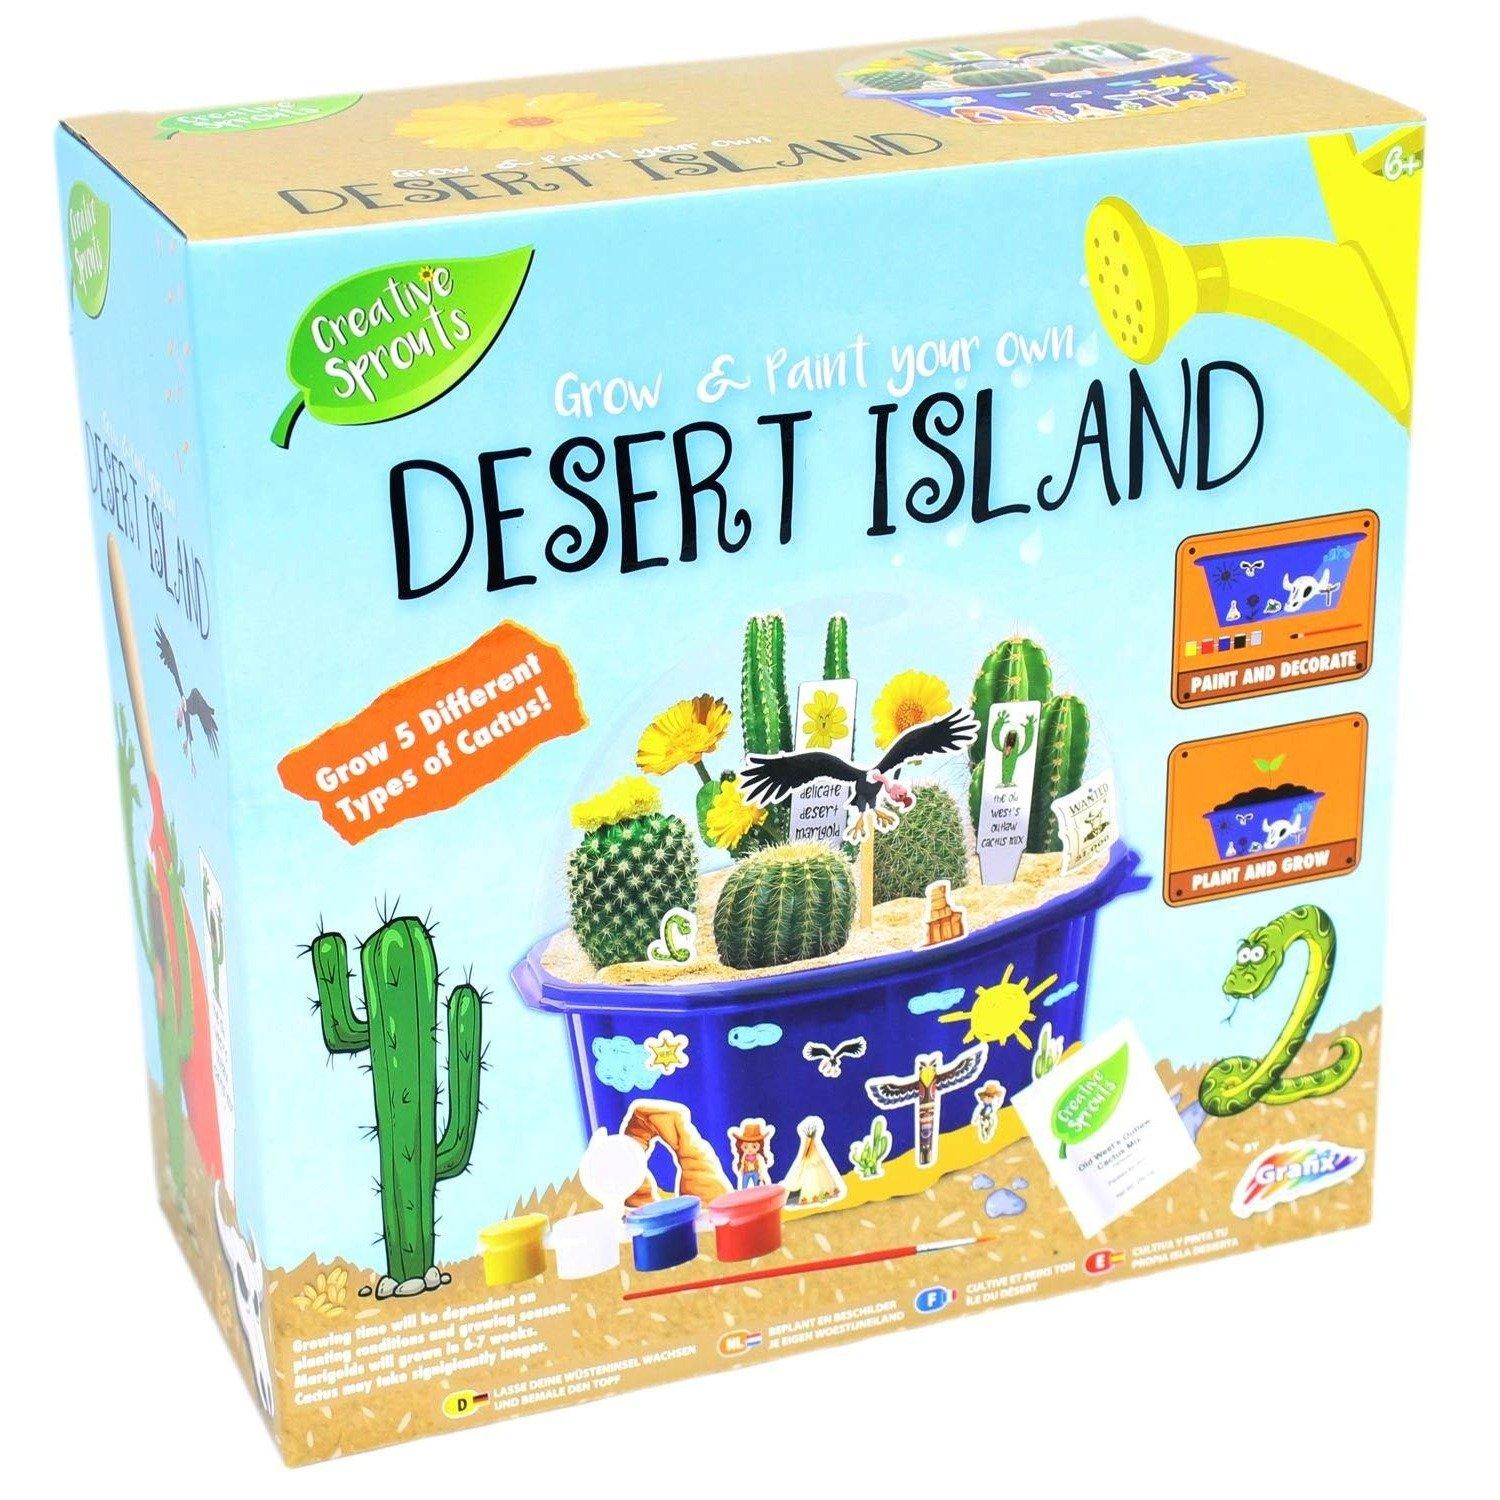 Grow and Paint Your Own Desert Island Garden